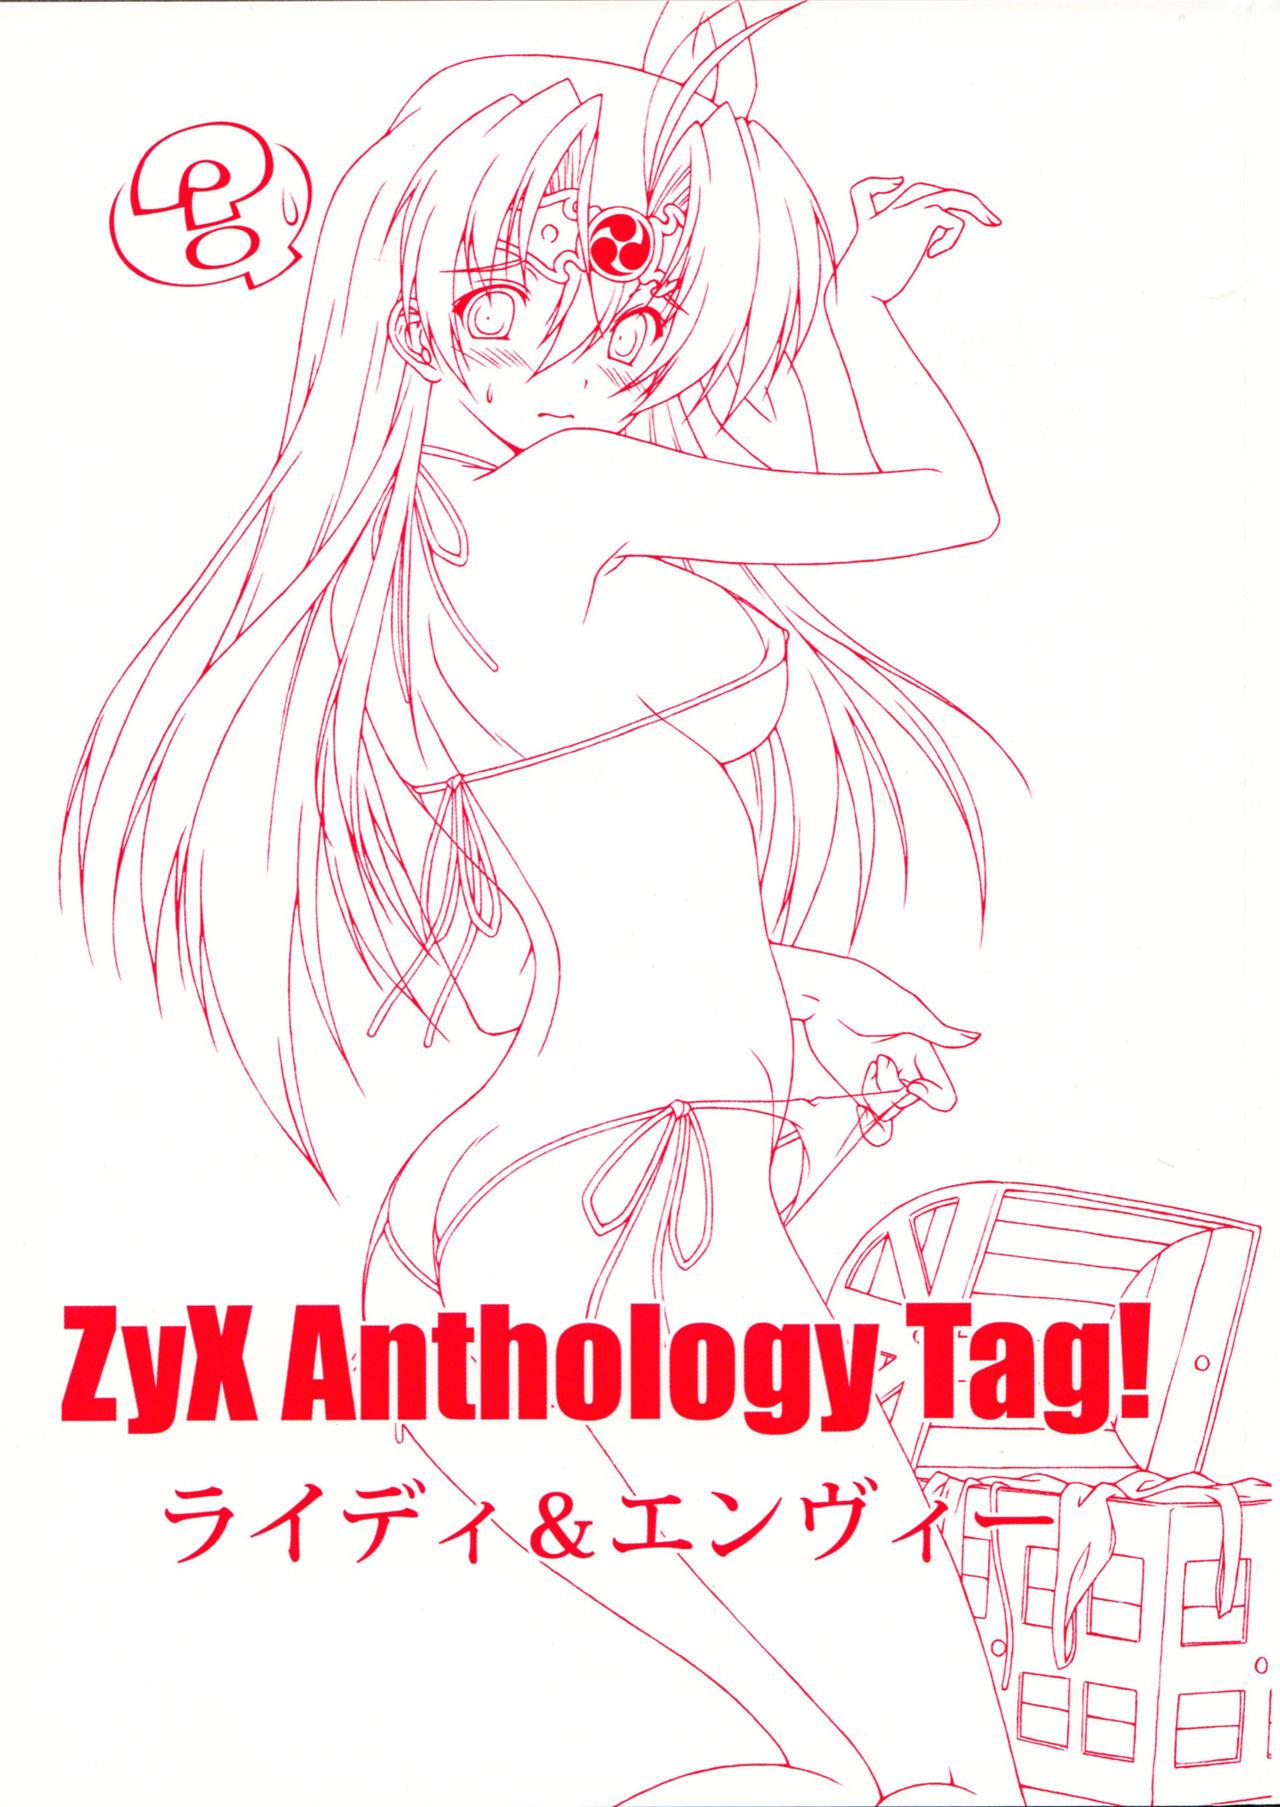 ZyX Anthology Tag! Raidy & Envy 3